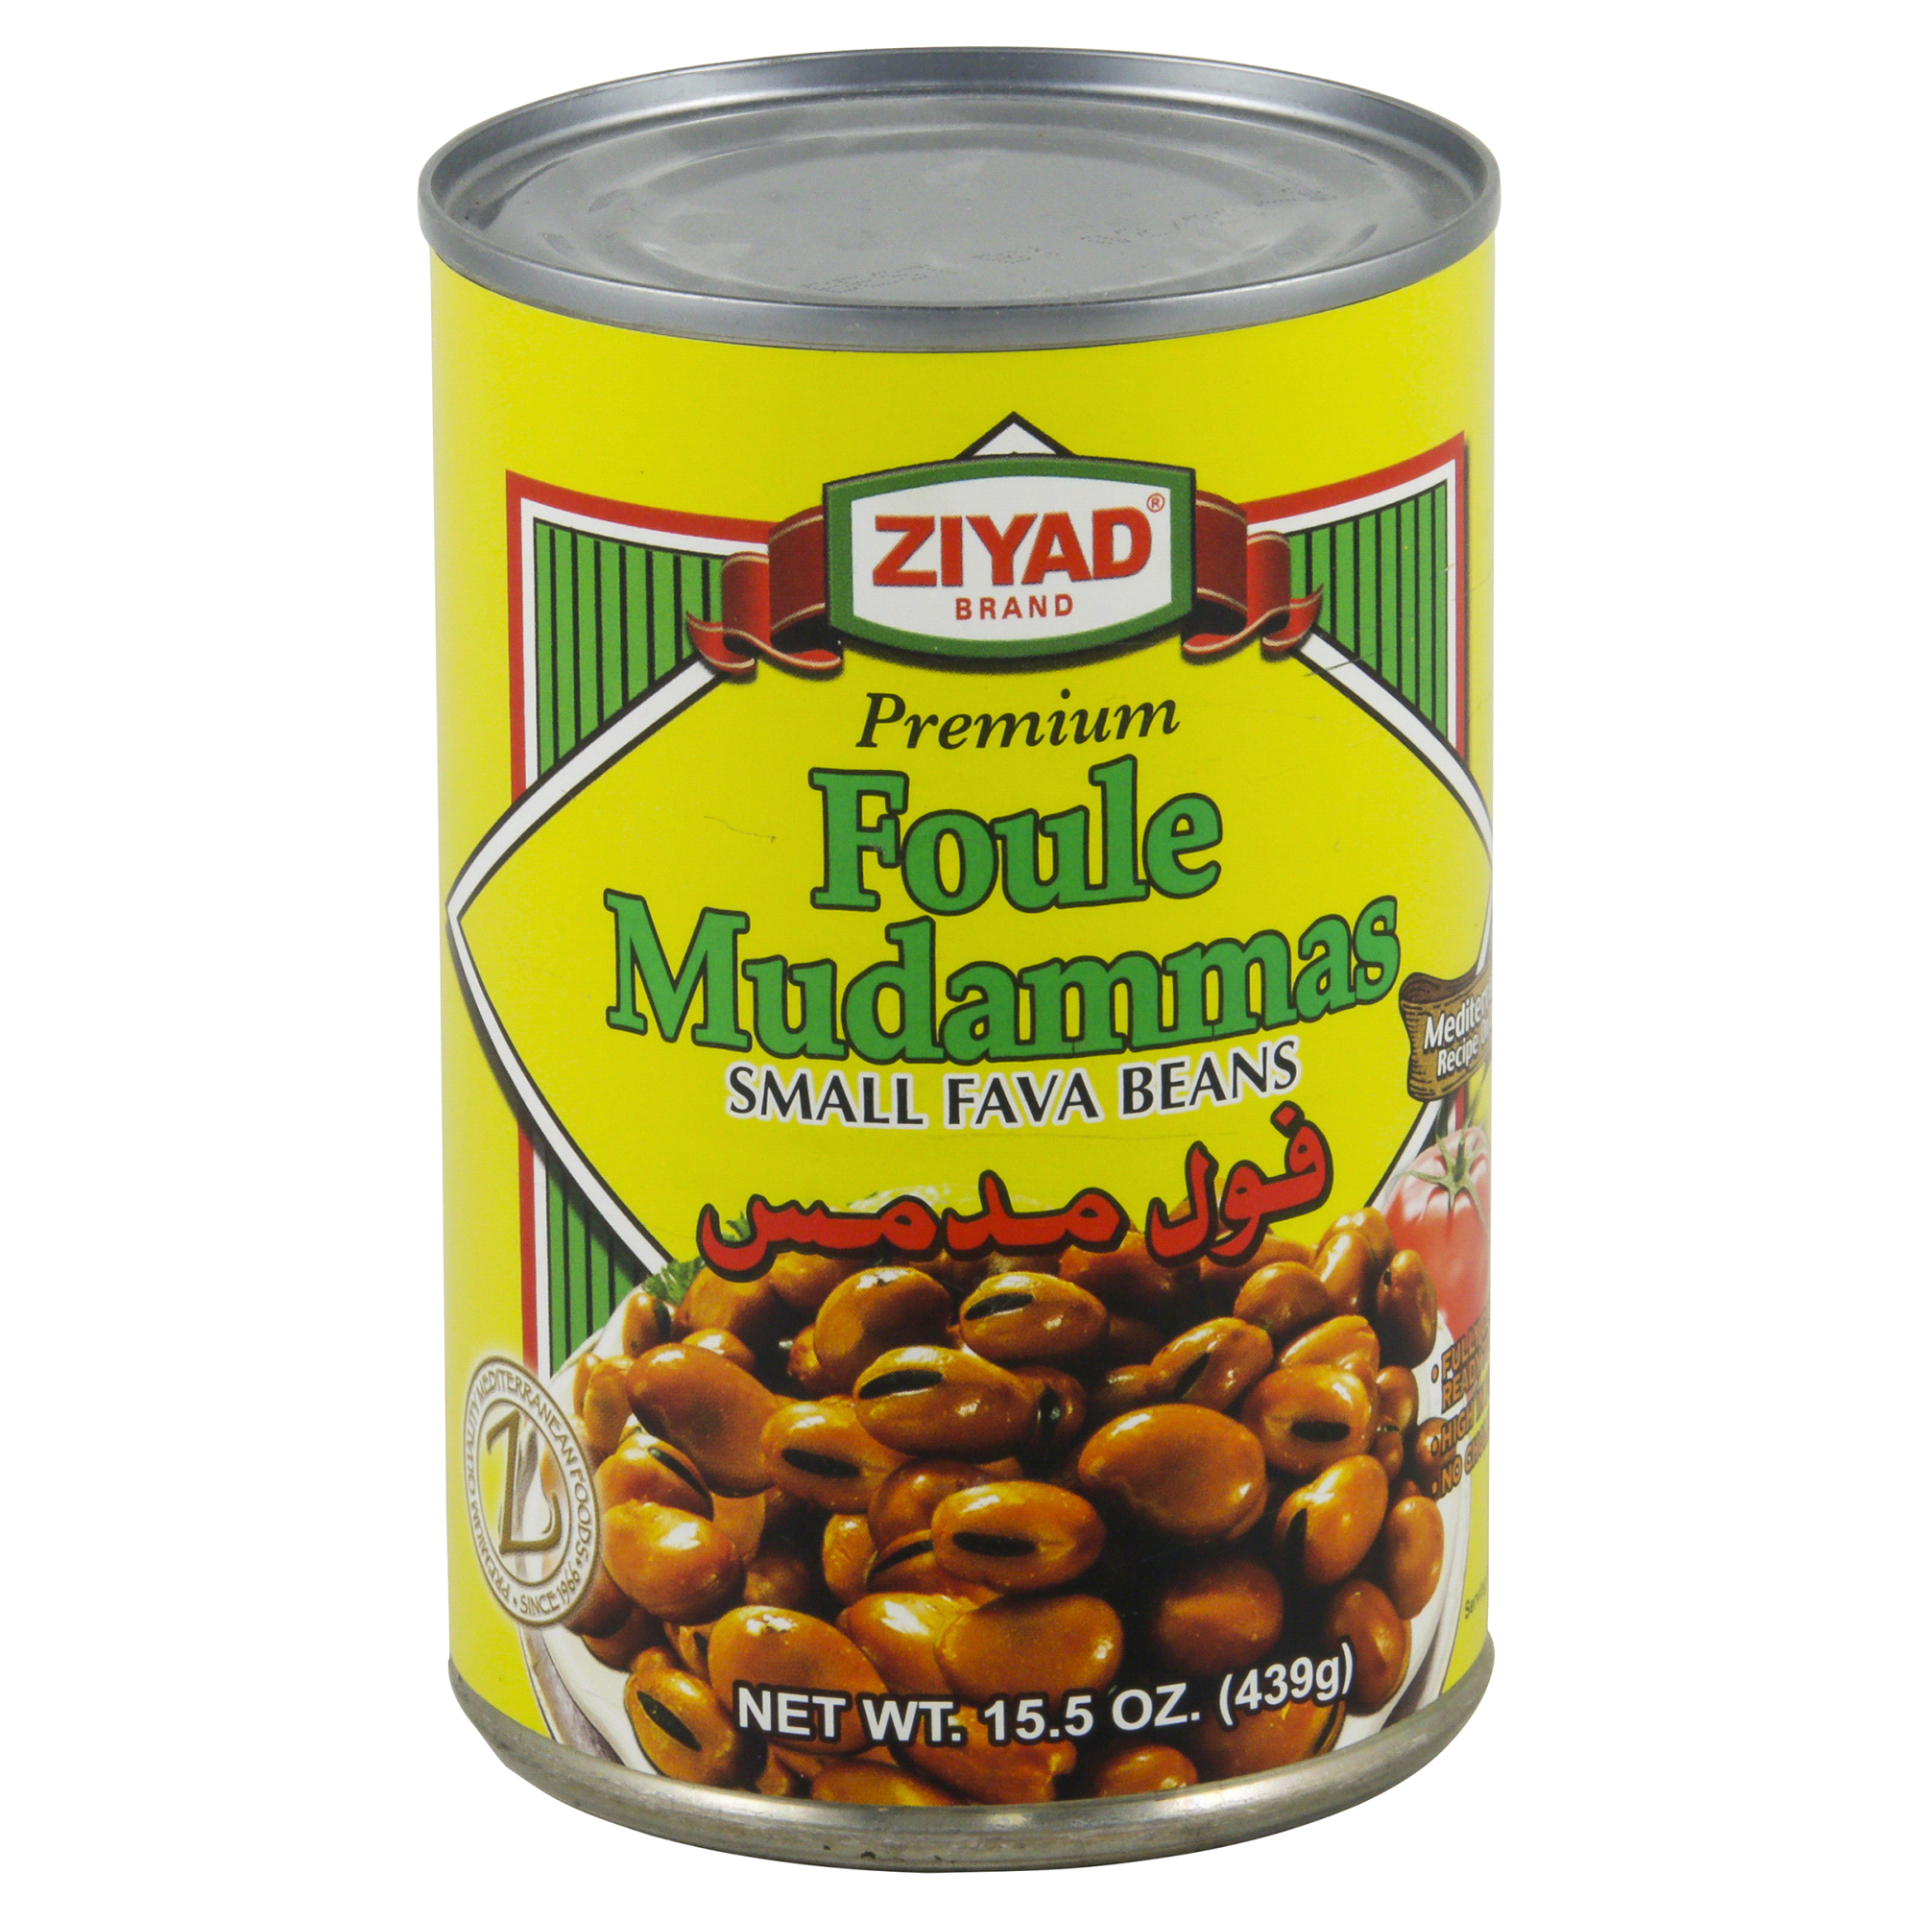 slide 1 of 4, Ziyad Premium Foule Mudammas Small Fava Beans, 15.5 oz